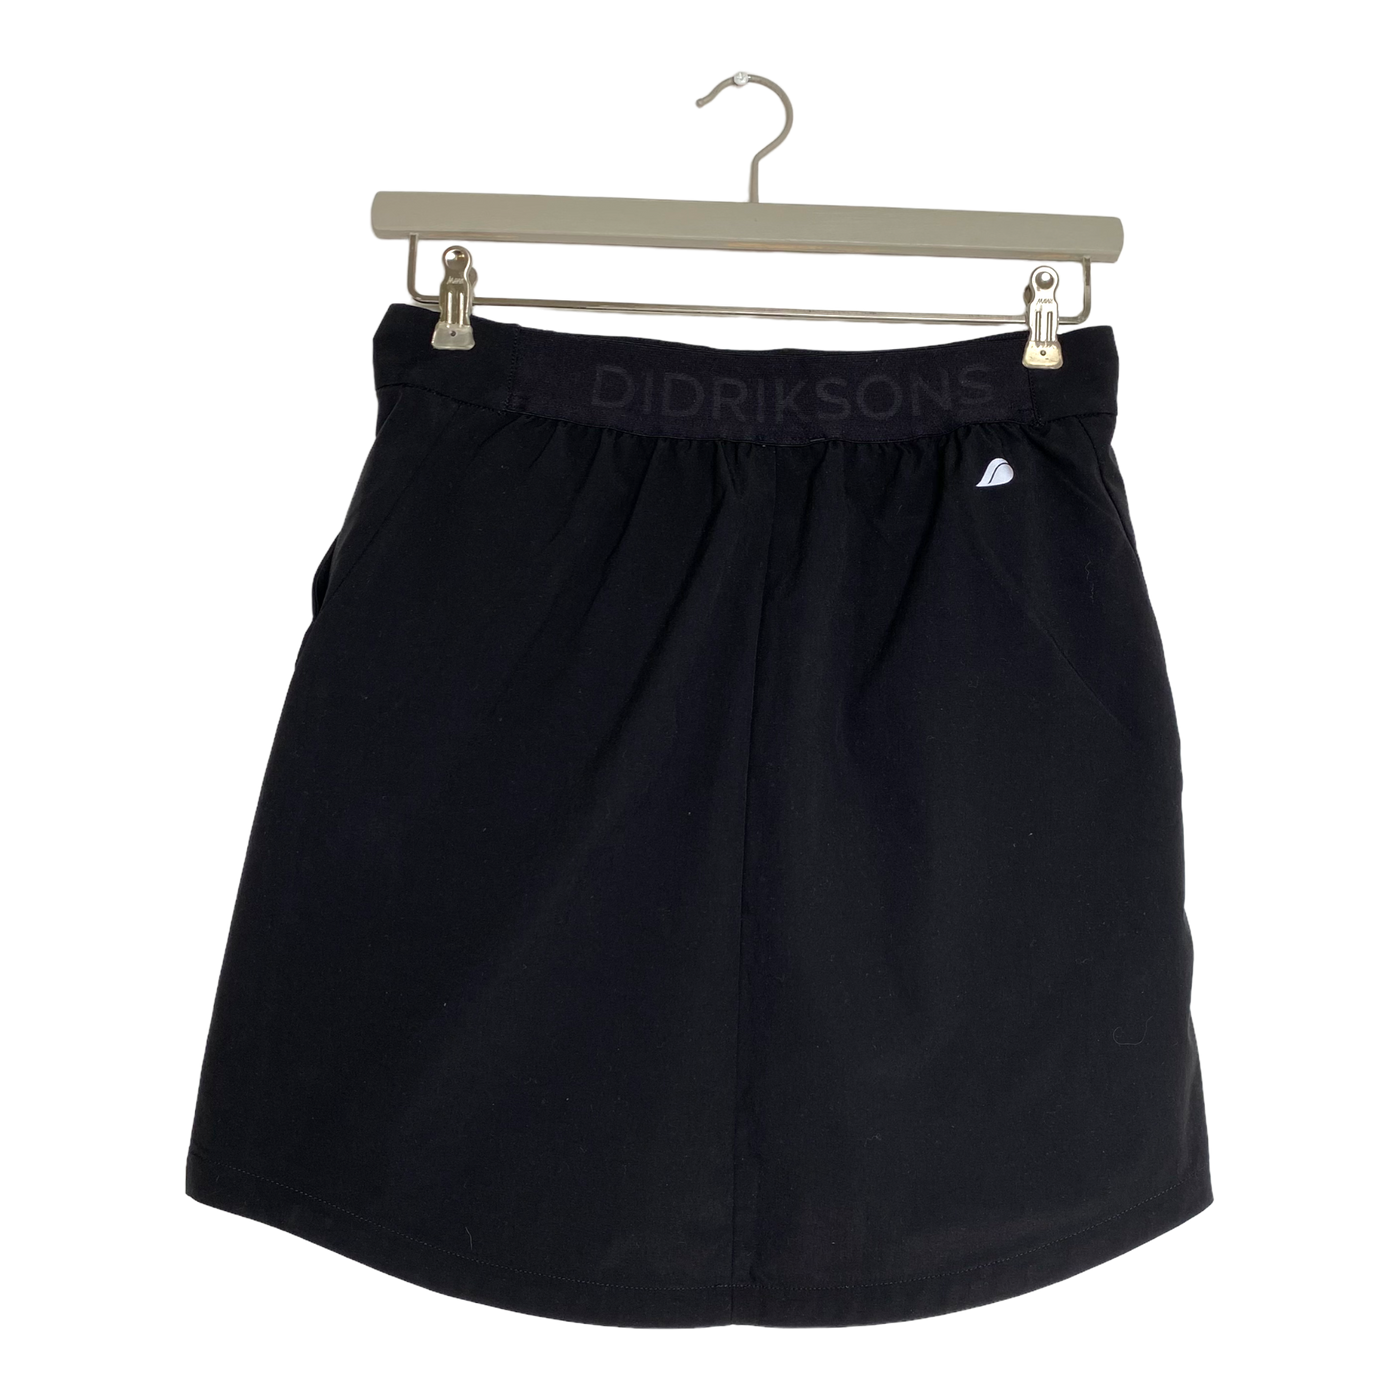 Didrikson active liv skirt / shorts, black | woman 36